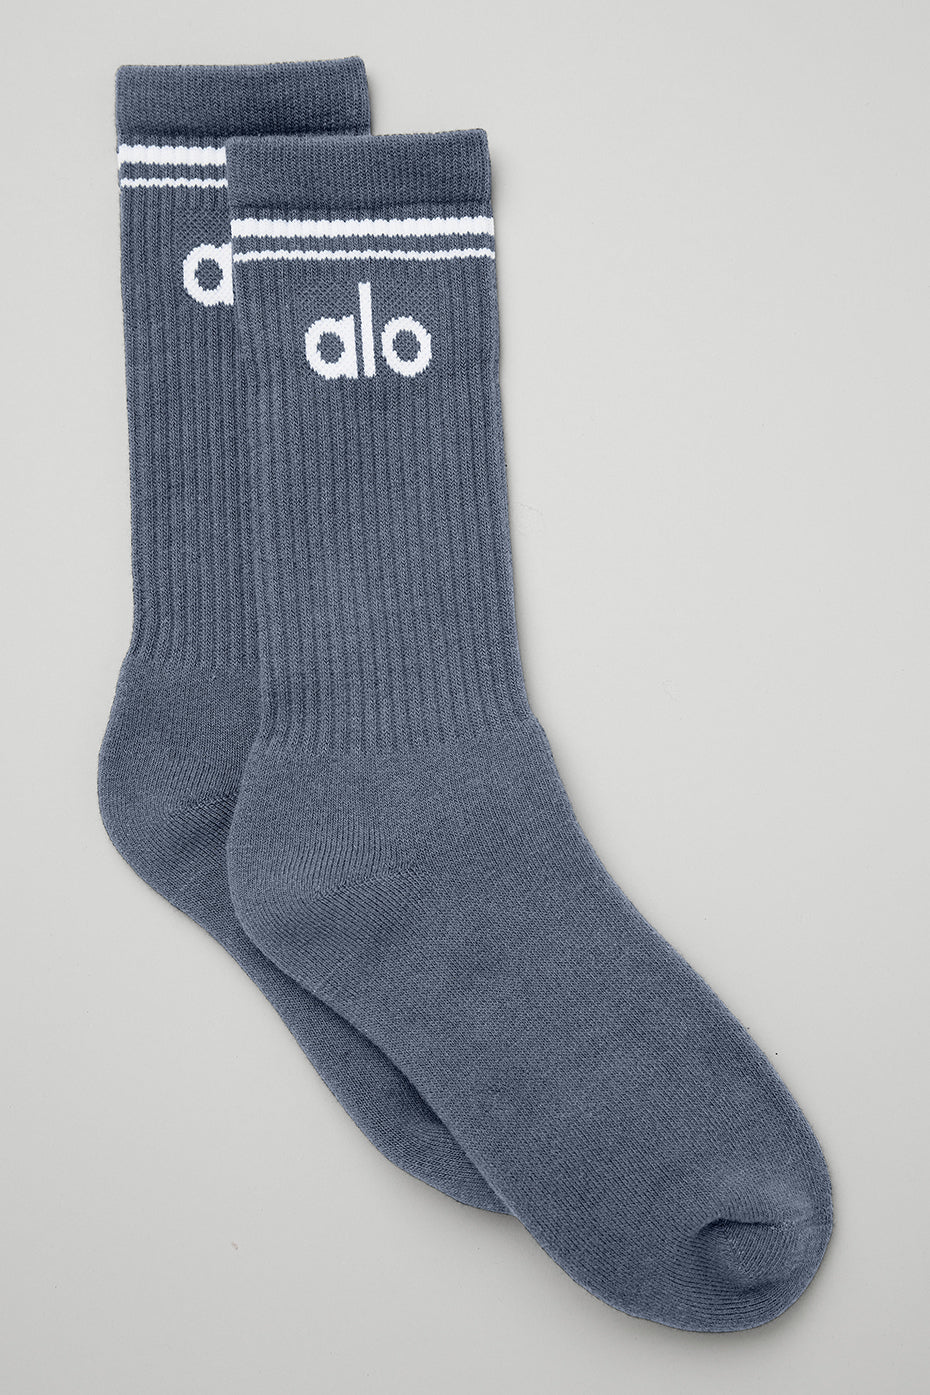 All the Alo socks